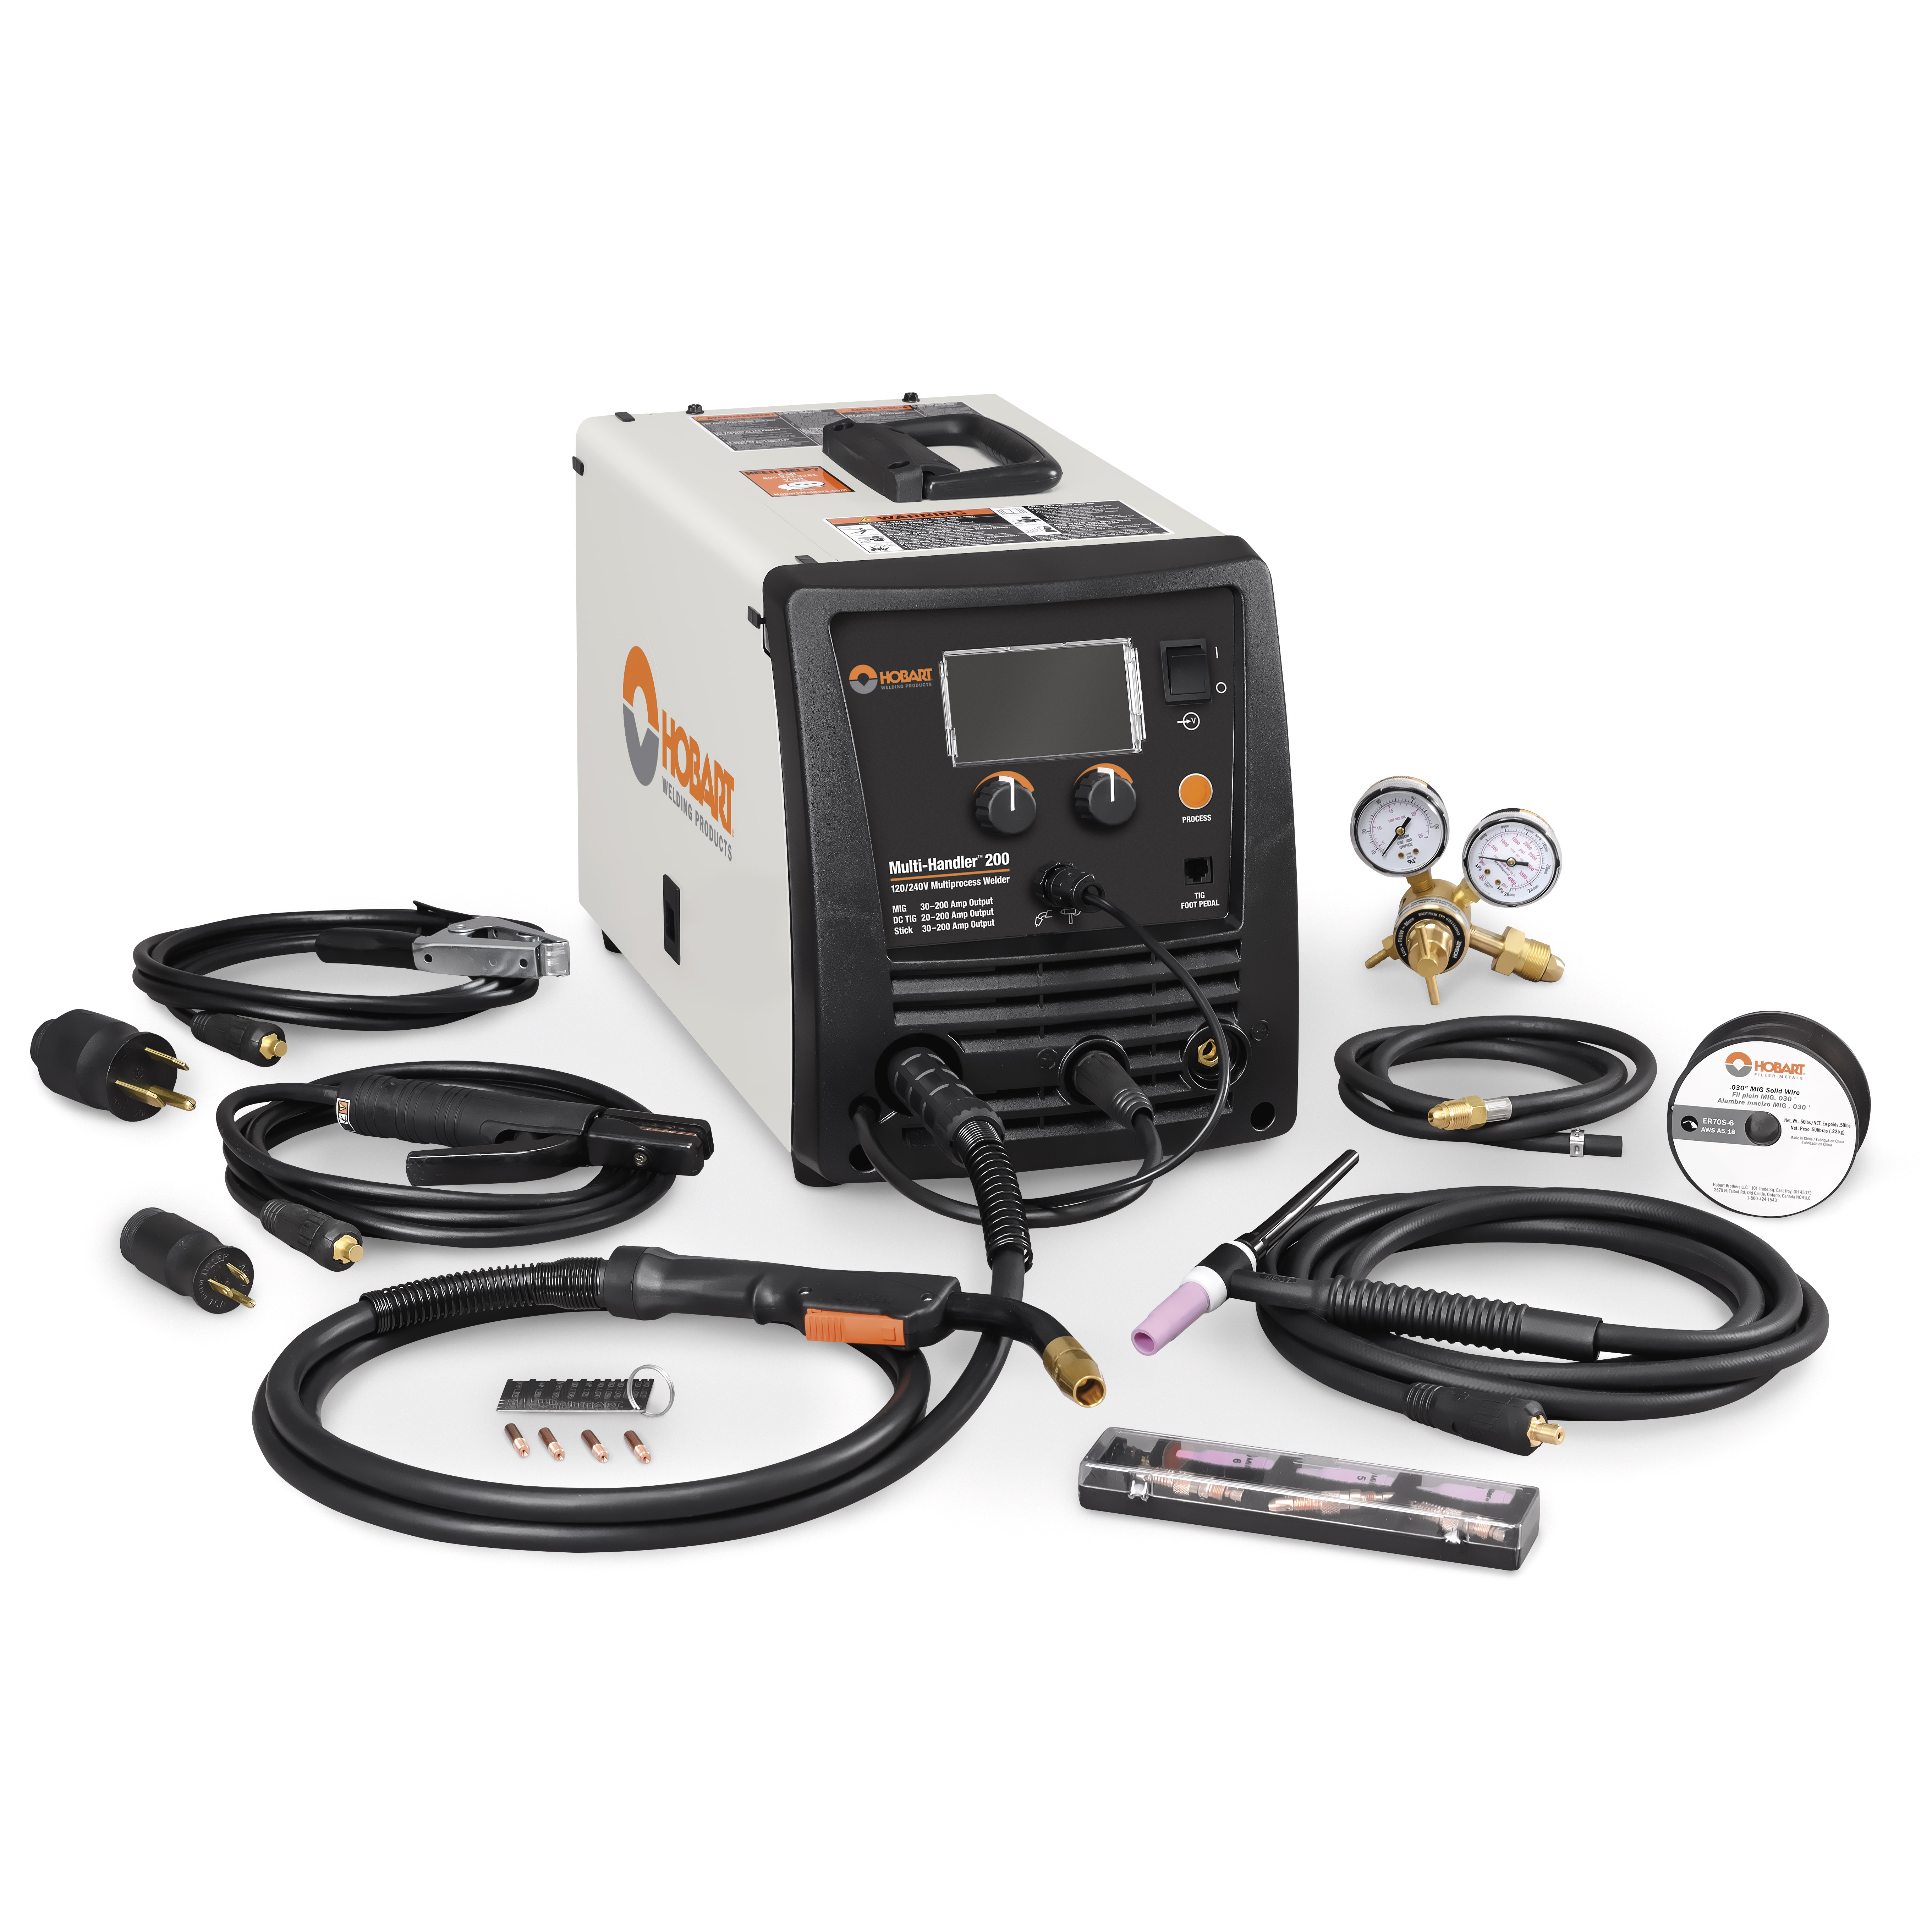 Buy American 16 Gauge Automotive Electrical Wire Online